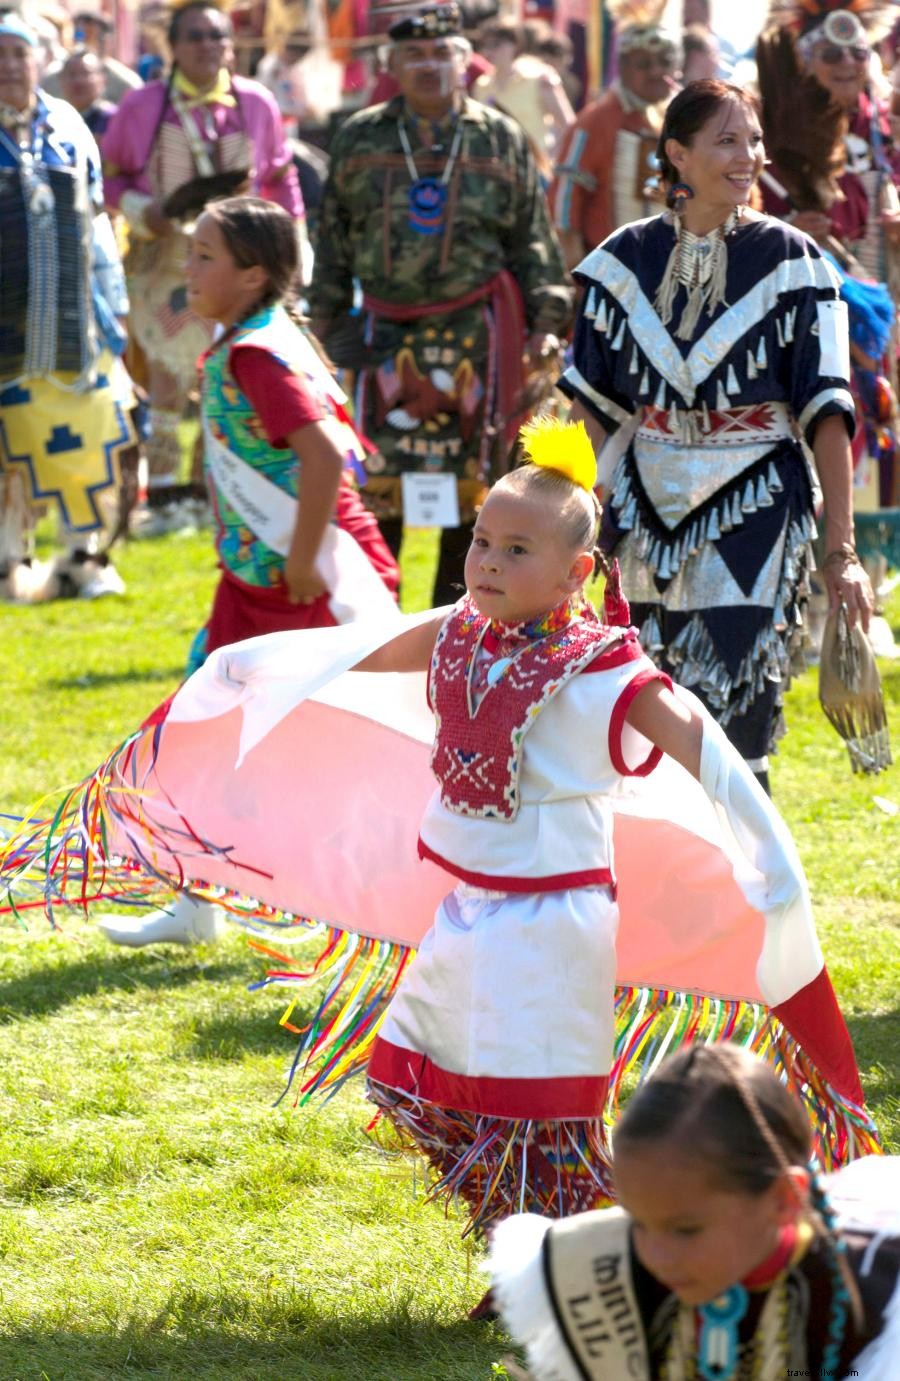 Menari, Drum &Kesenian Gabungkan di Minnesota s Native American Powows 